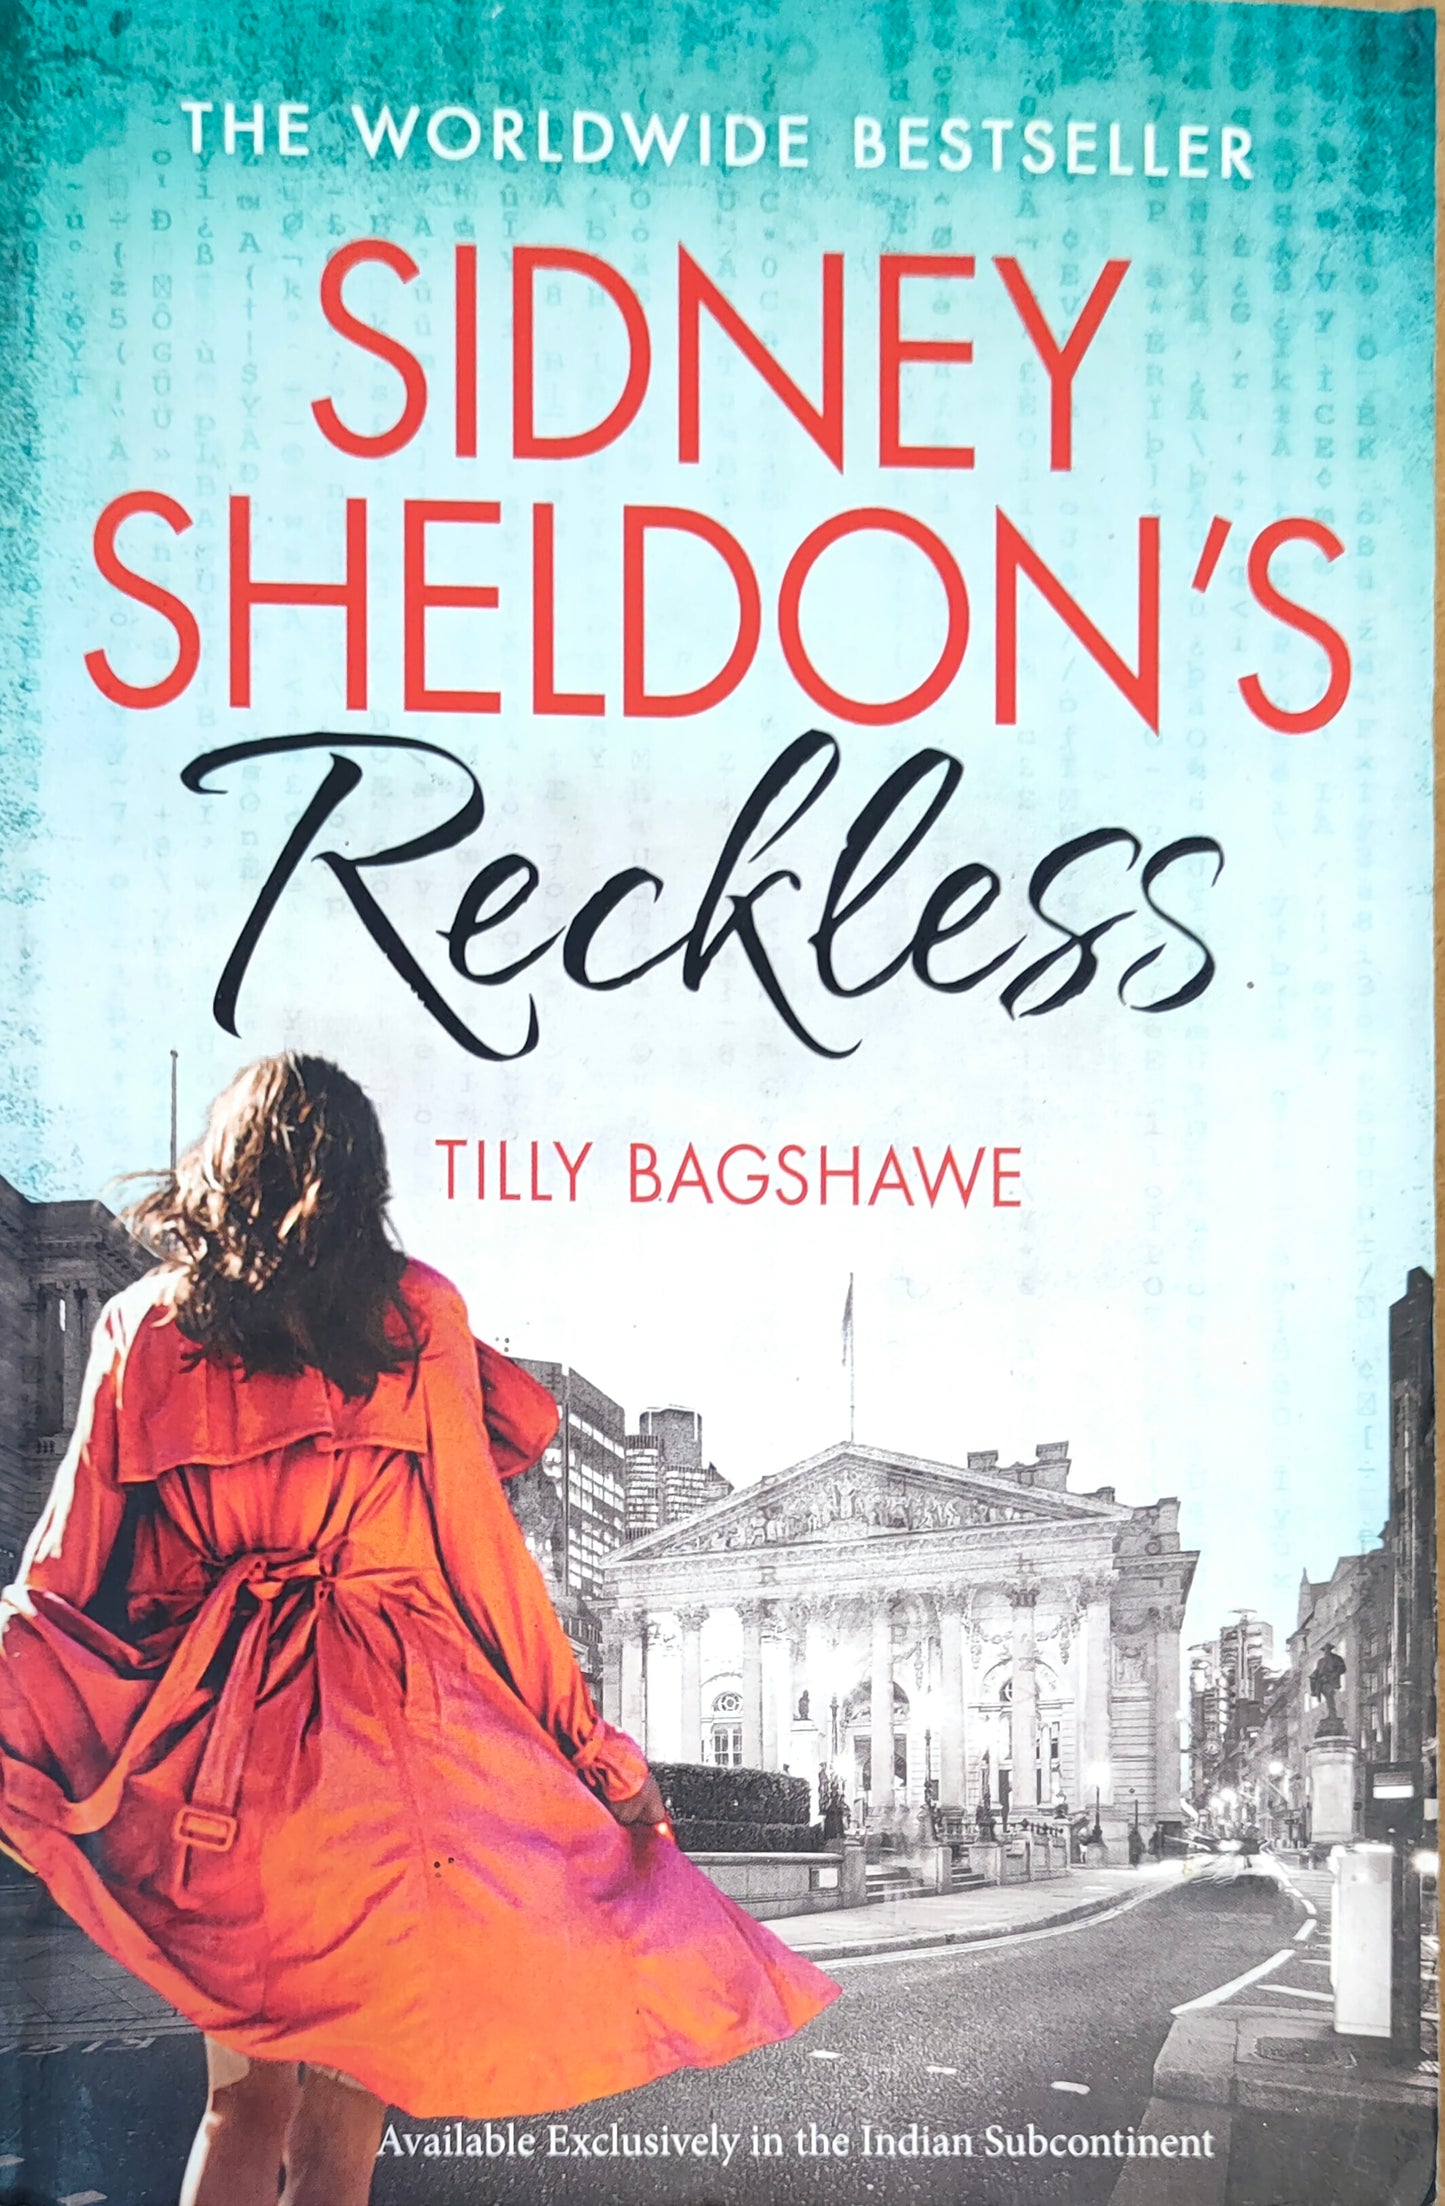 Sidney sheldon's reckless